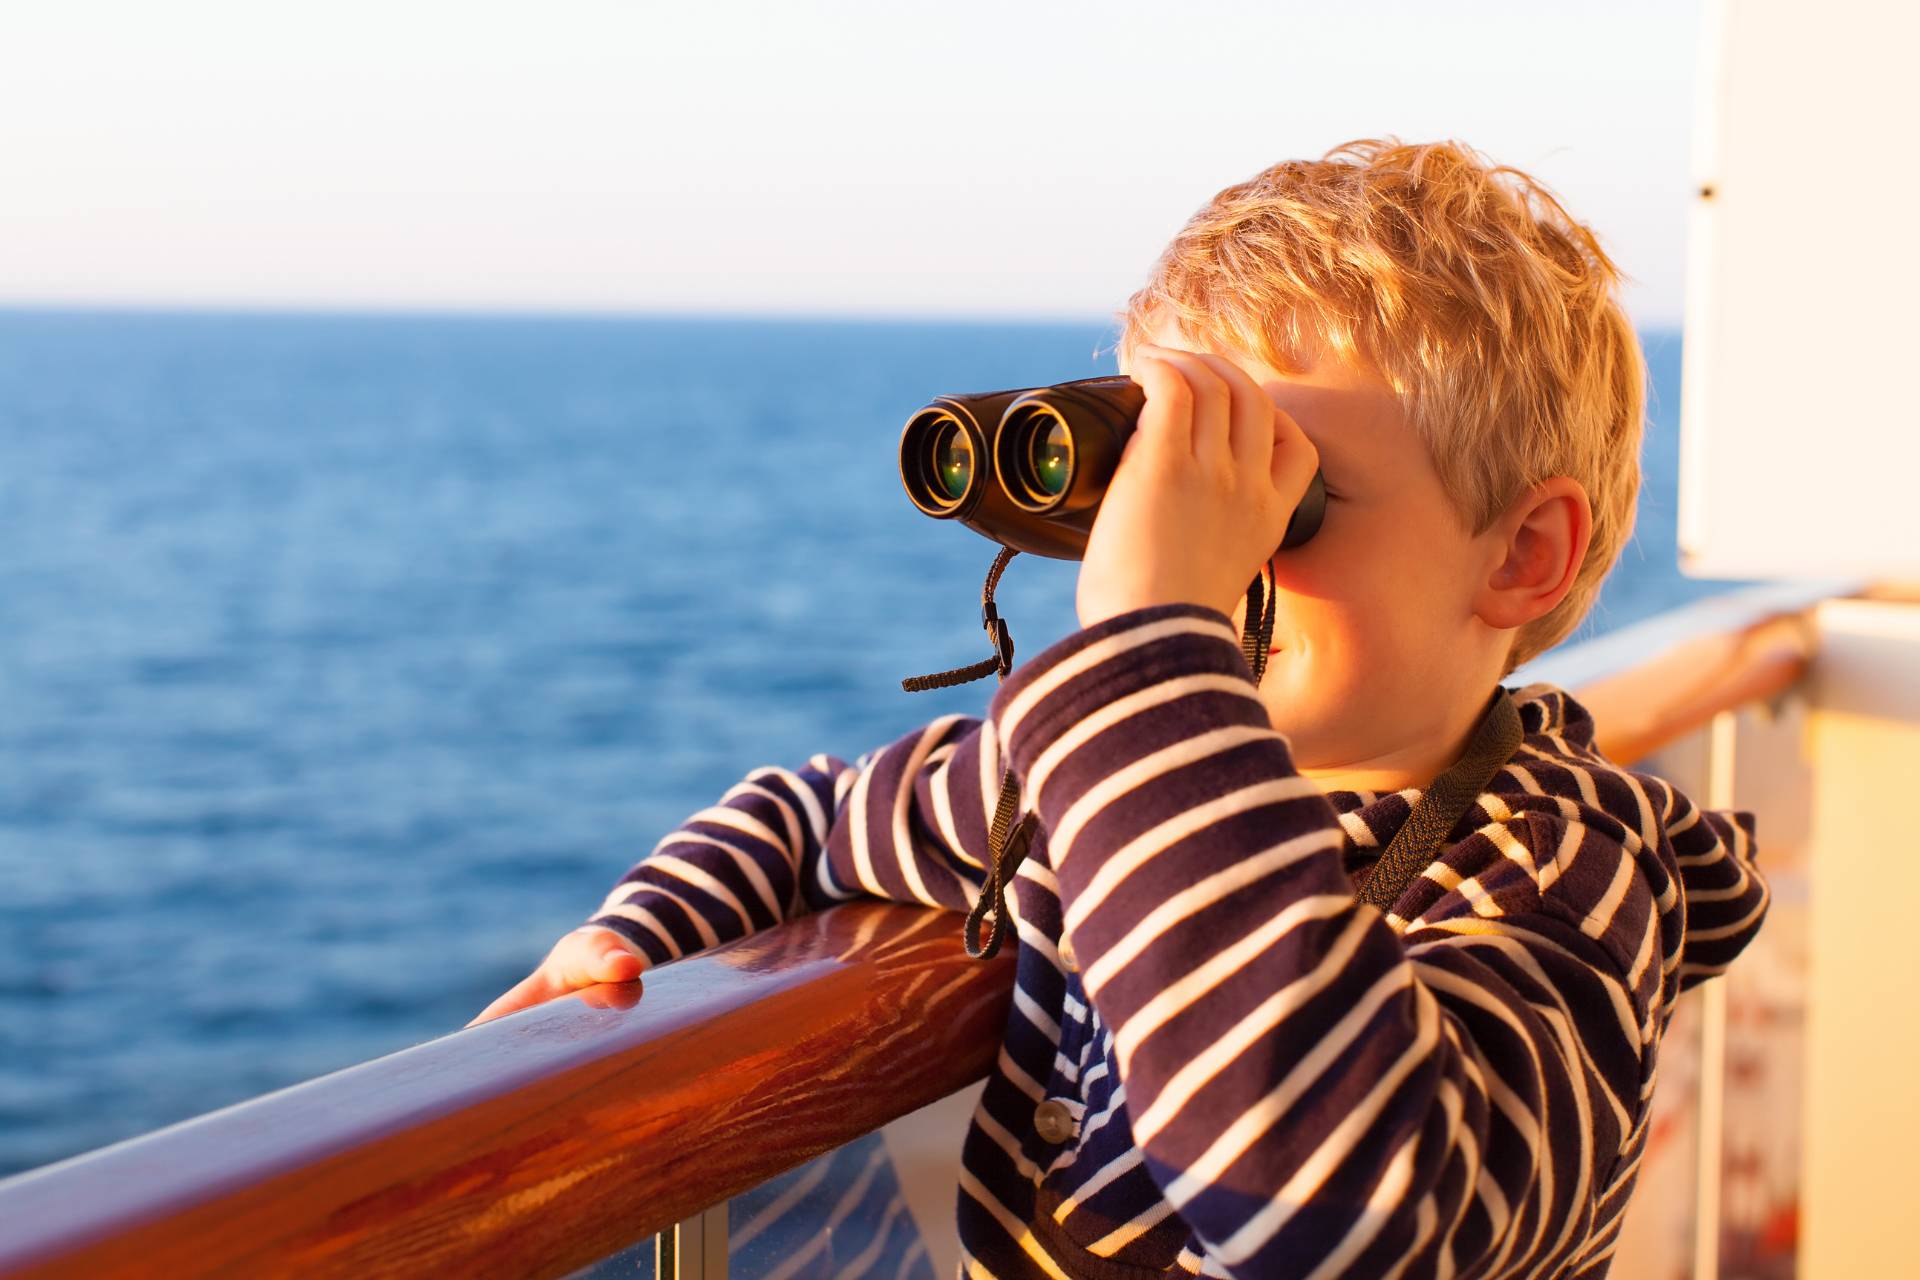 kid cruising with binoculars©Getty Images